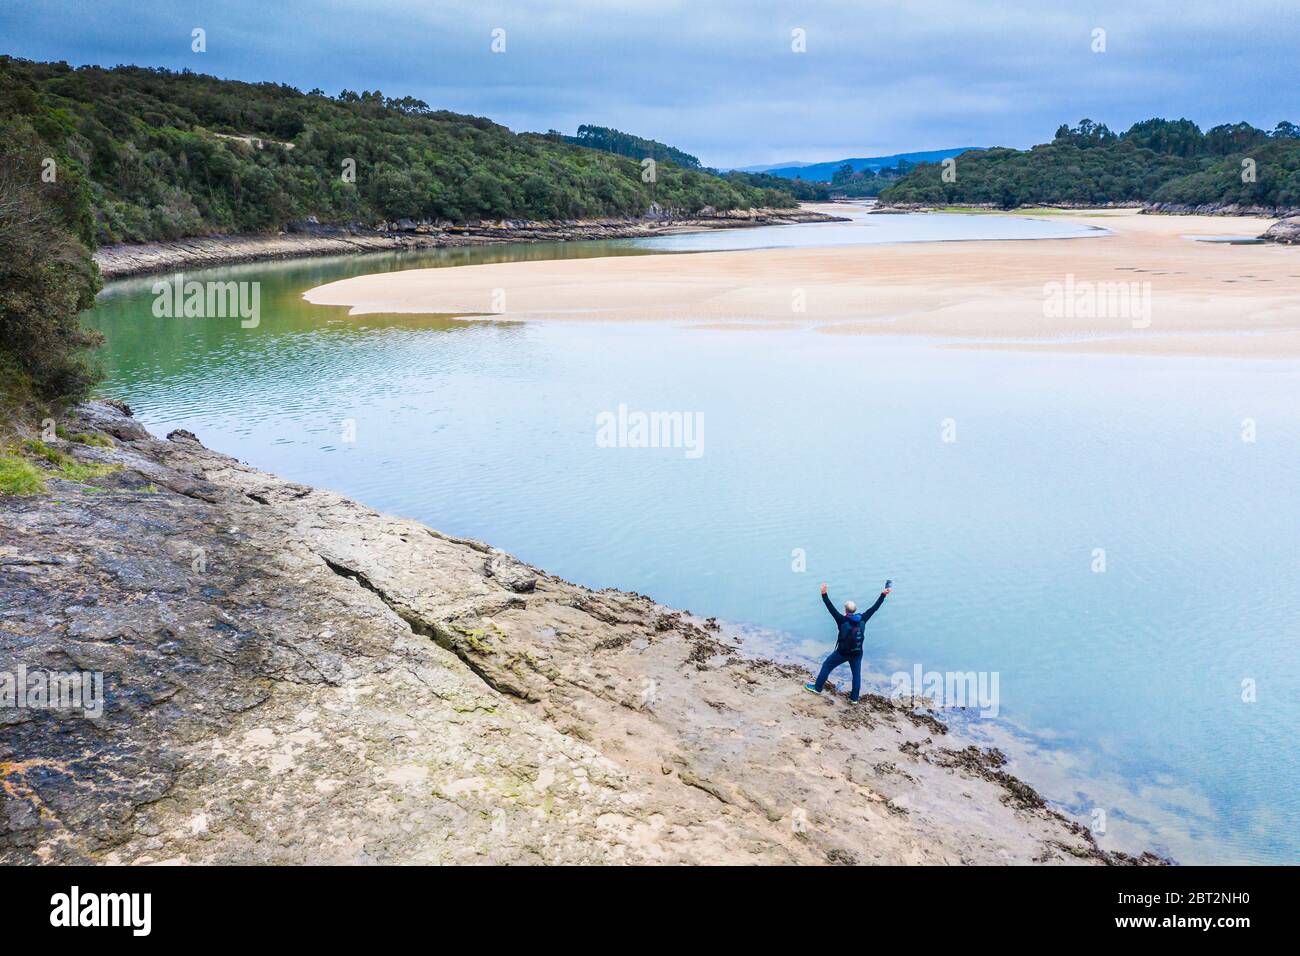 Mensch, Fluss und sandige Sedimente bei Ebbe nahe am Meer. Stockfoto